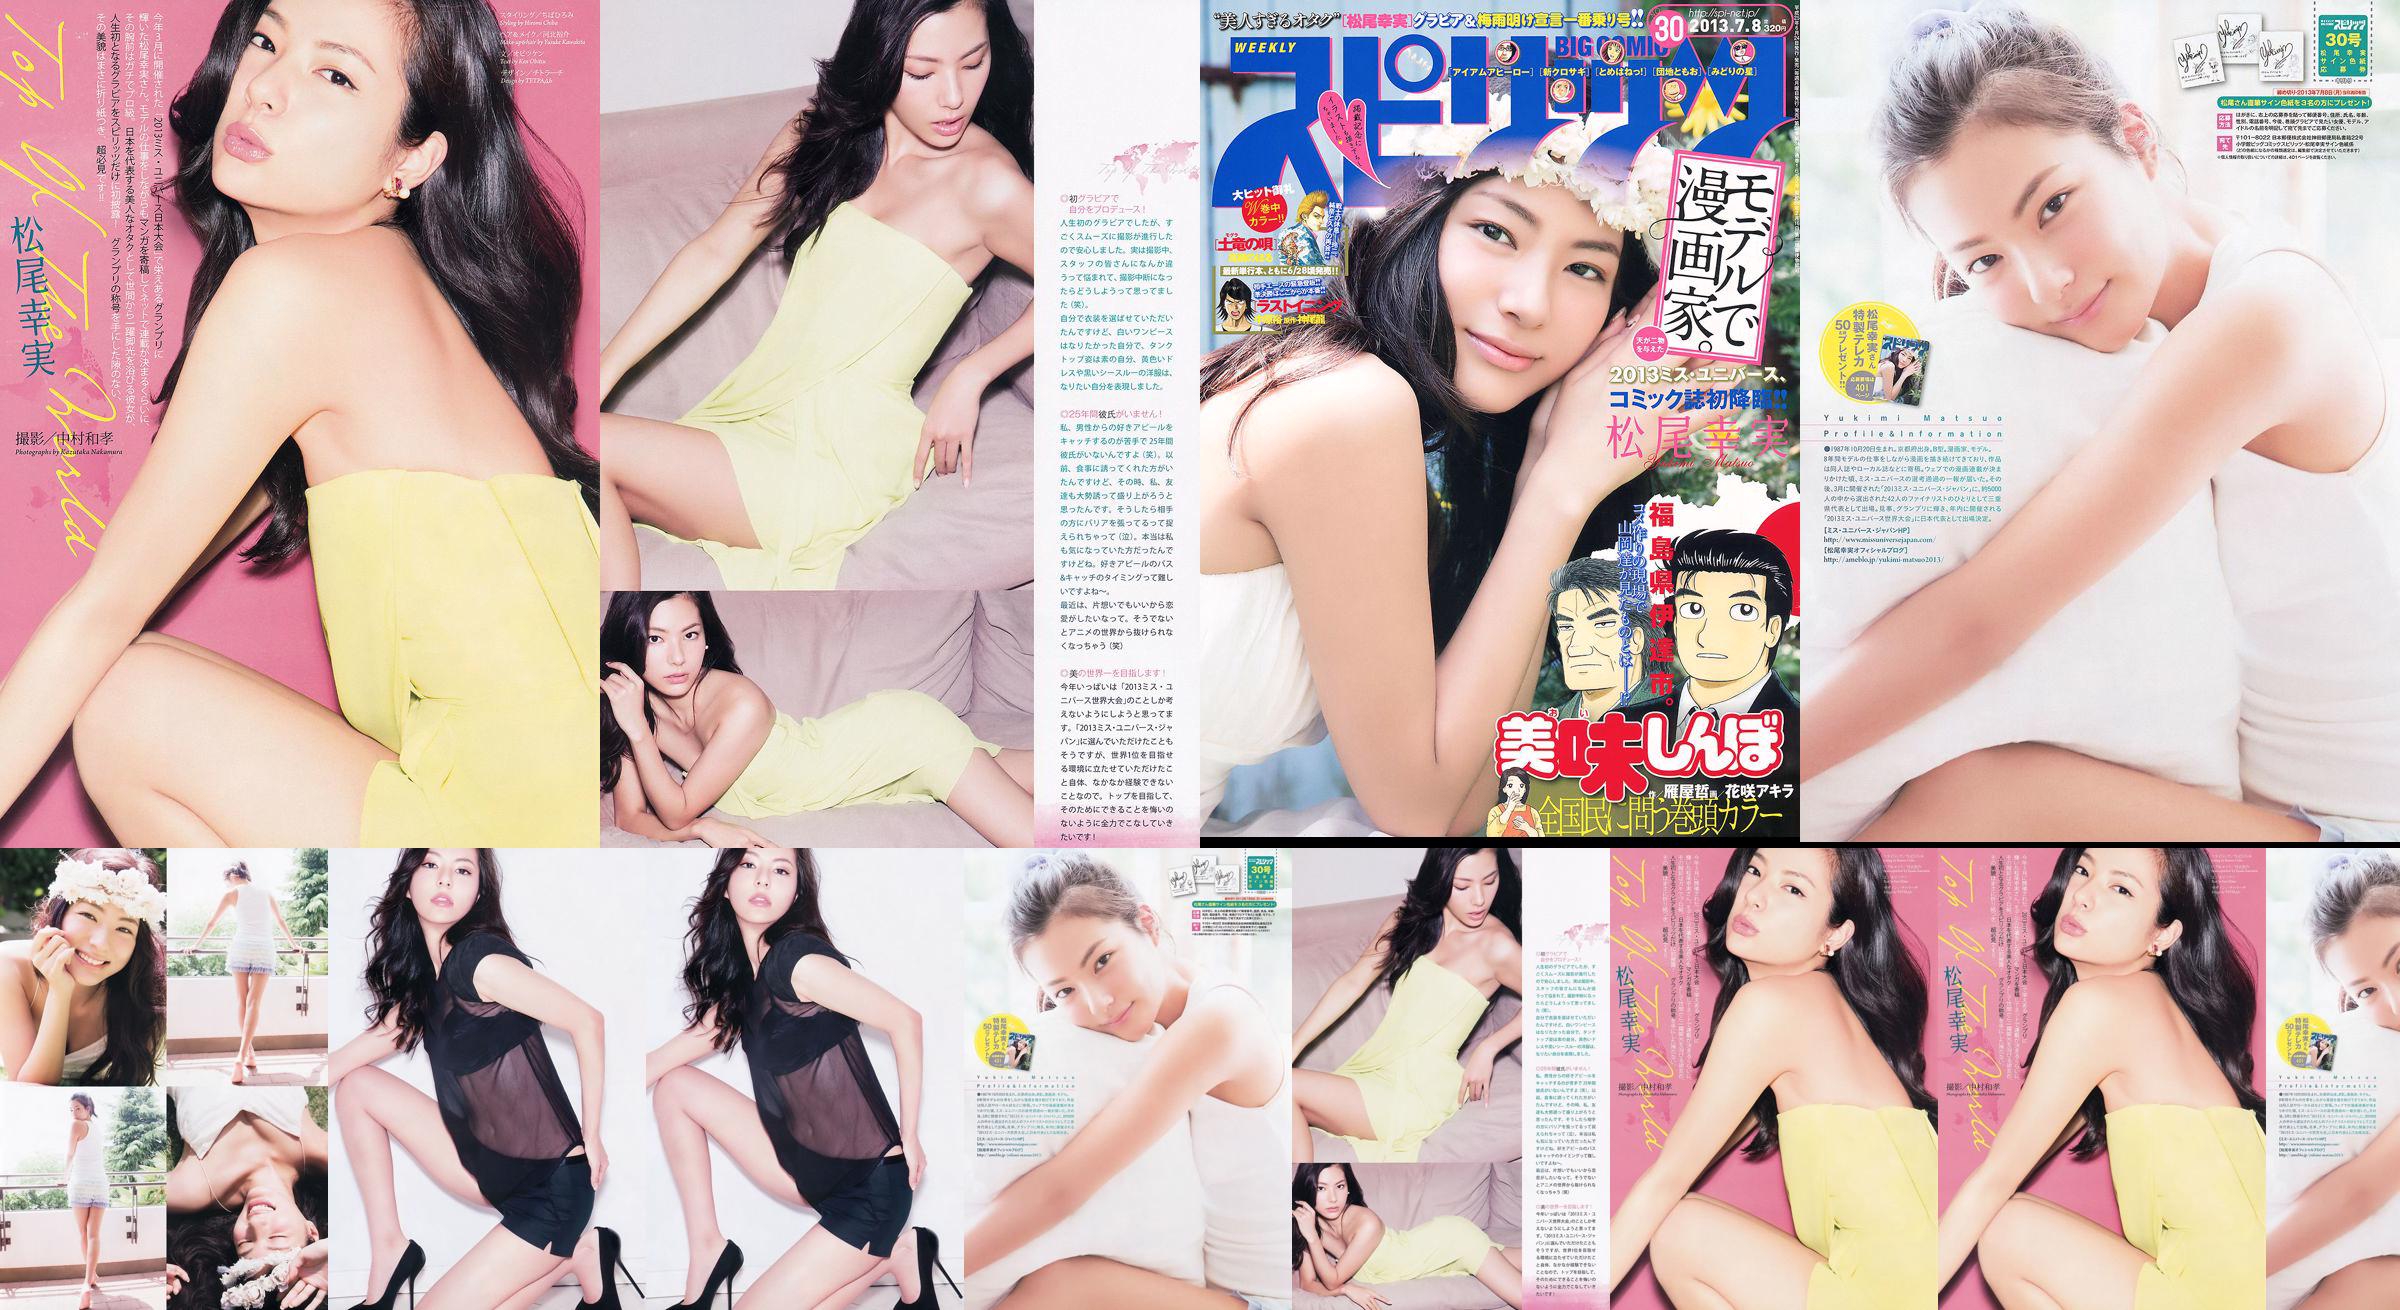 [Semangat Komik Besar Mingguan] Komi Matsuo 2013 Majalah Foto No.30 No.25438b Halaman 3